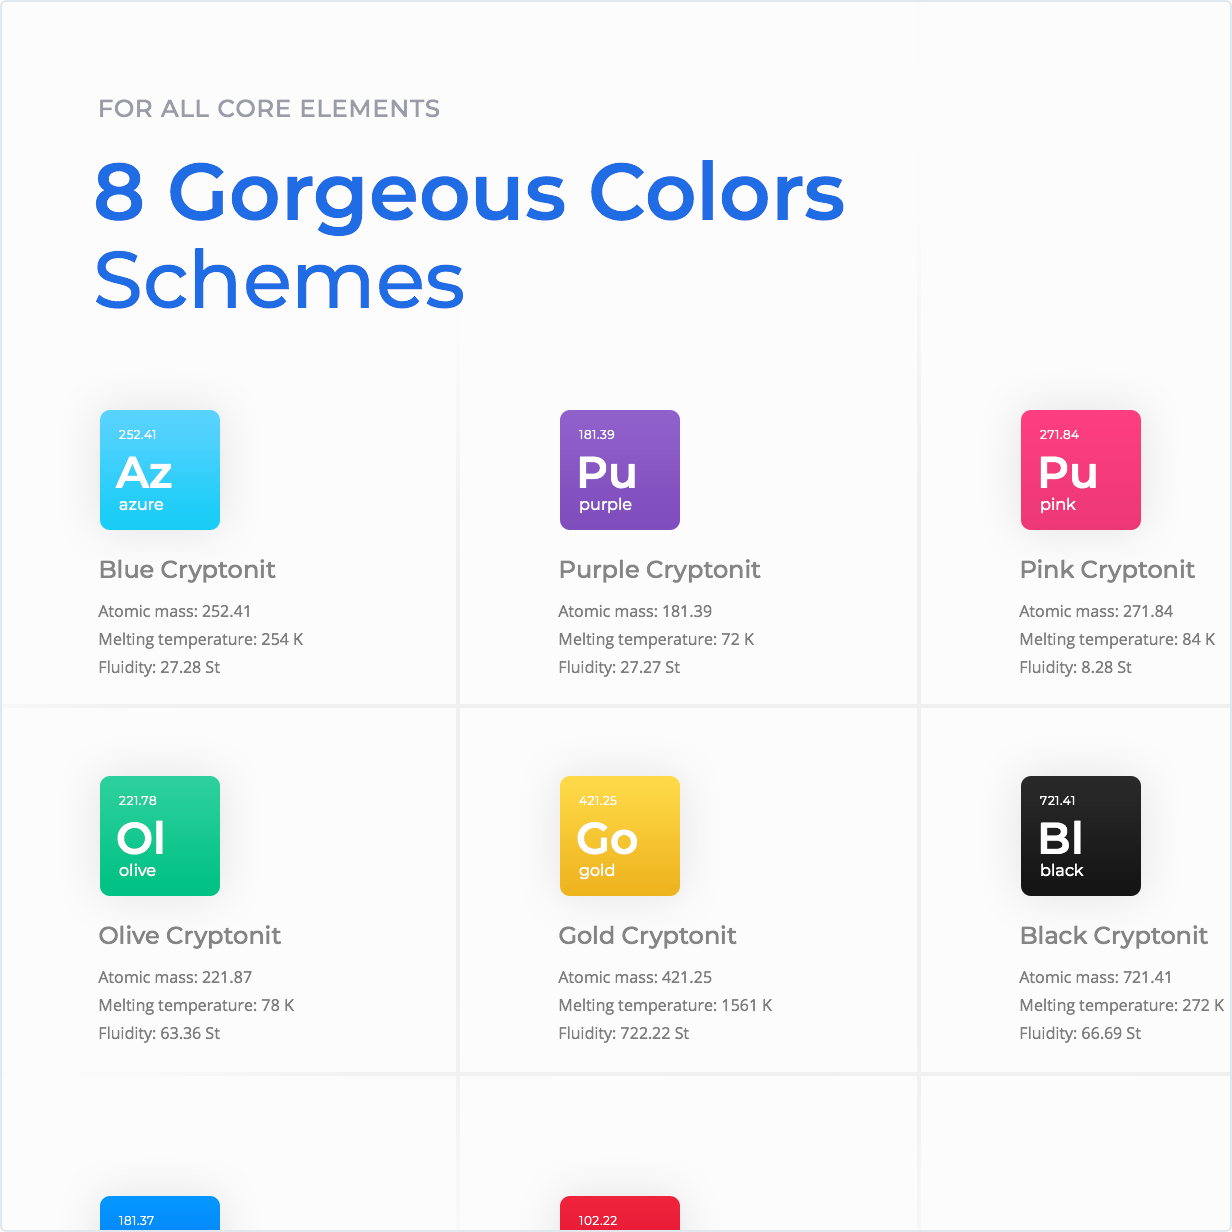 8 Gorgeous colors schemes for all core elements